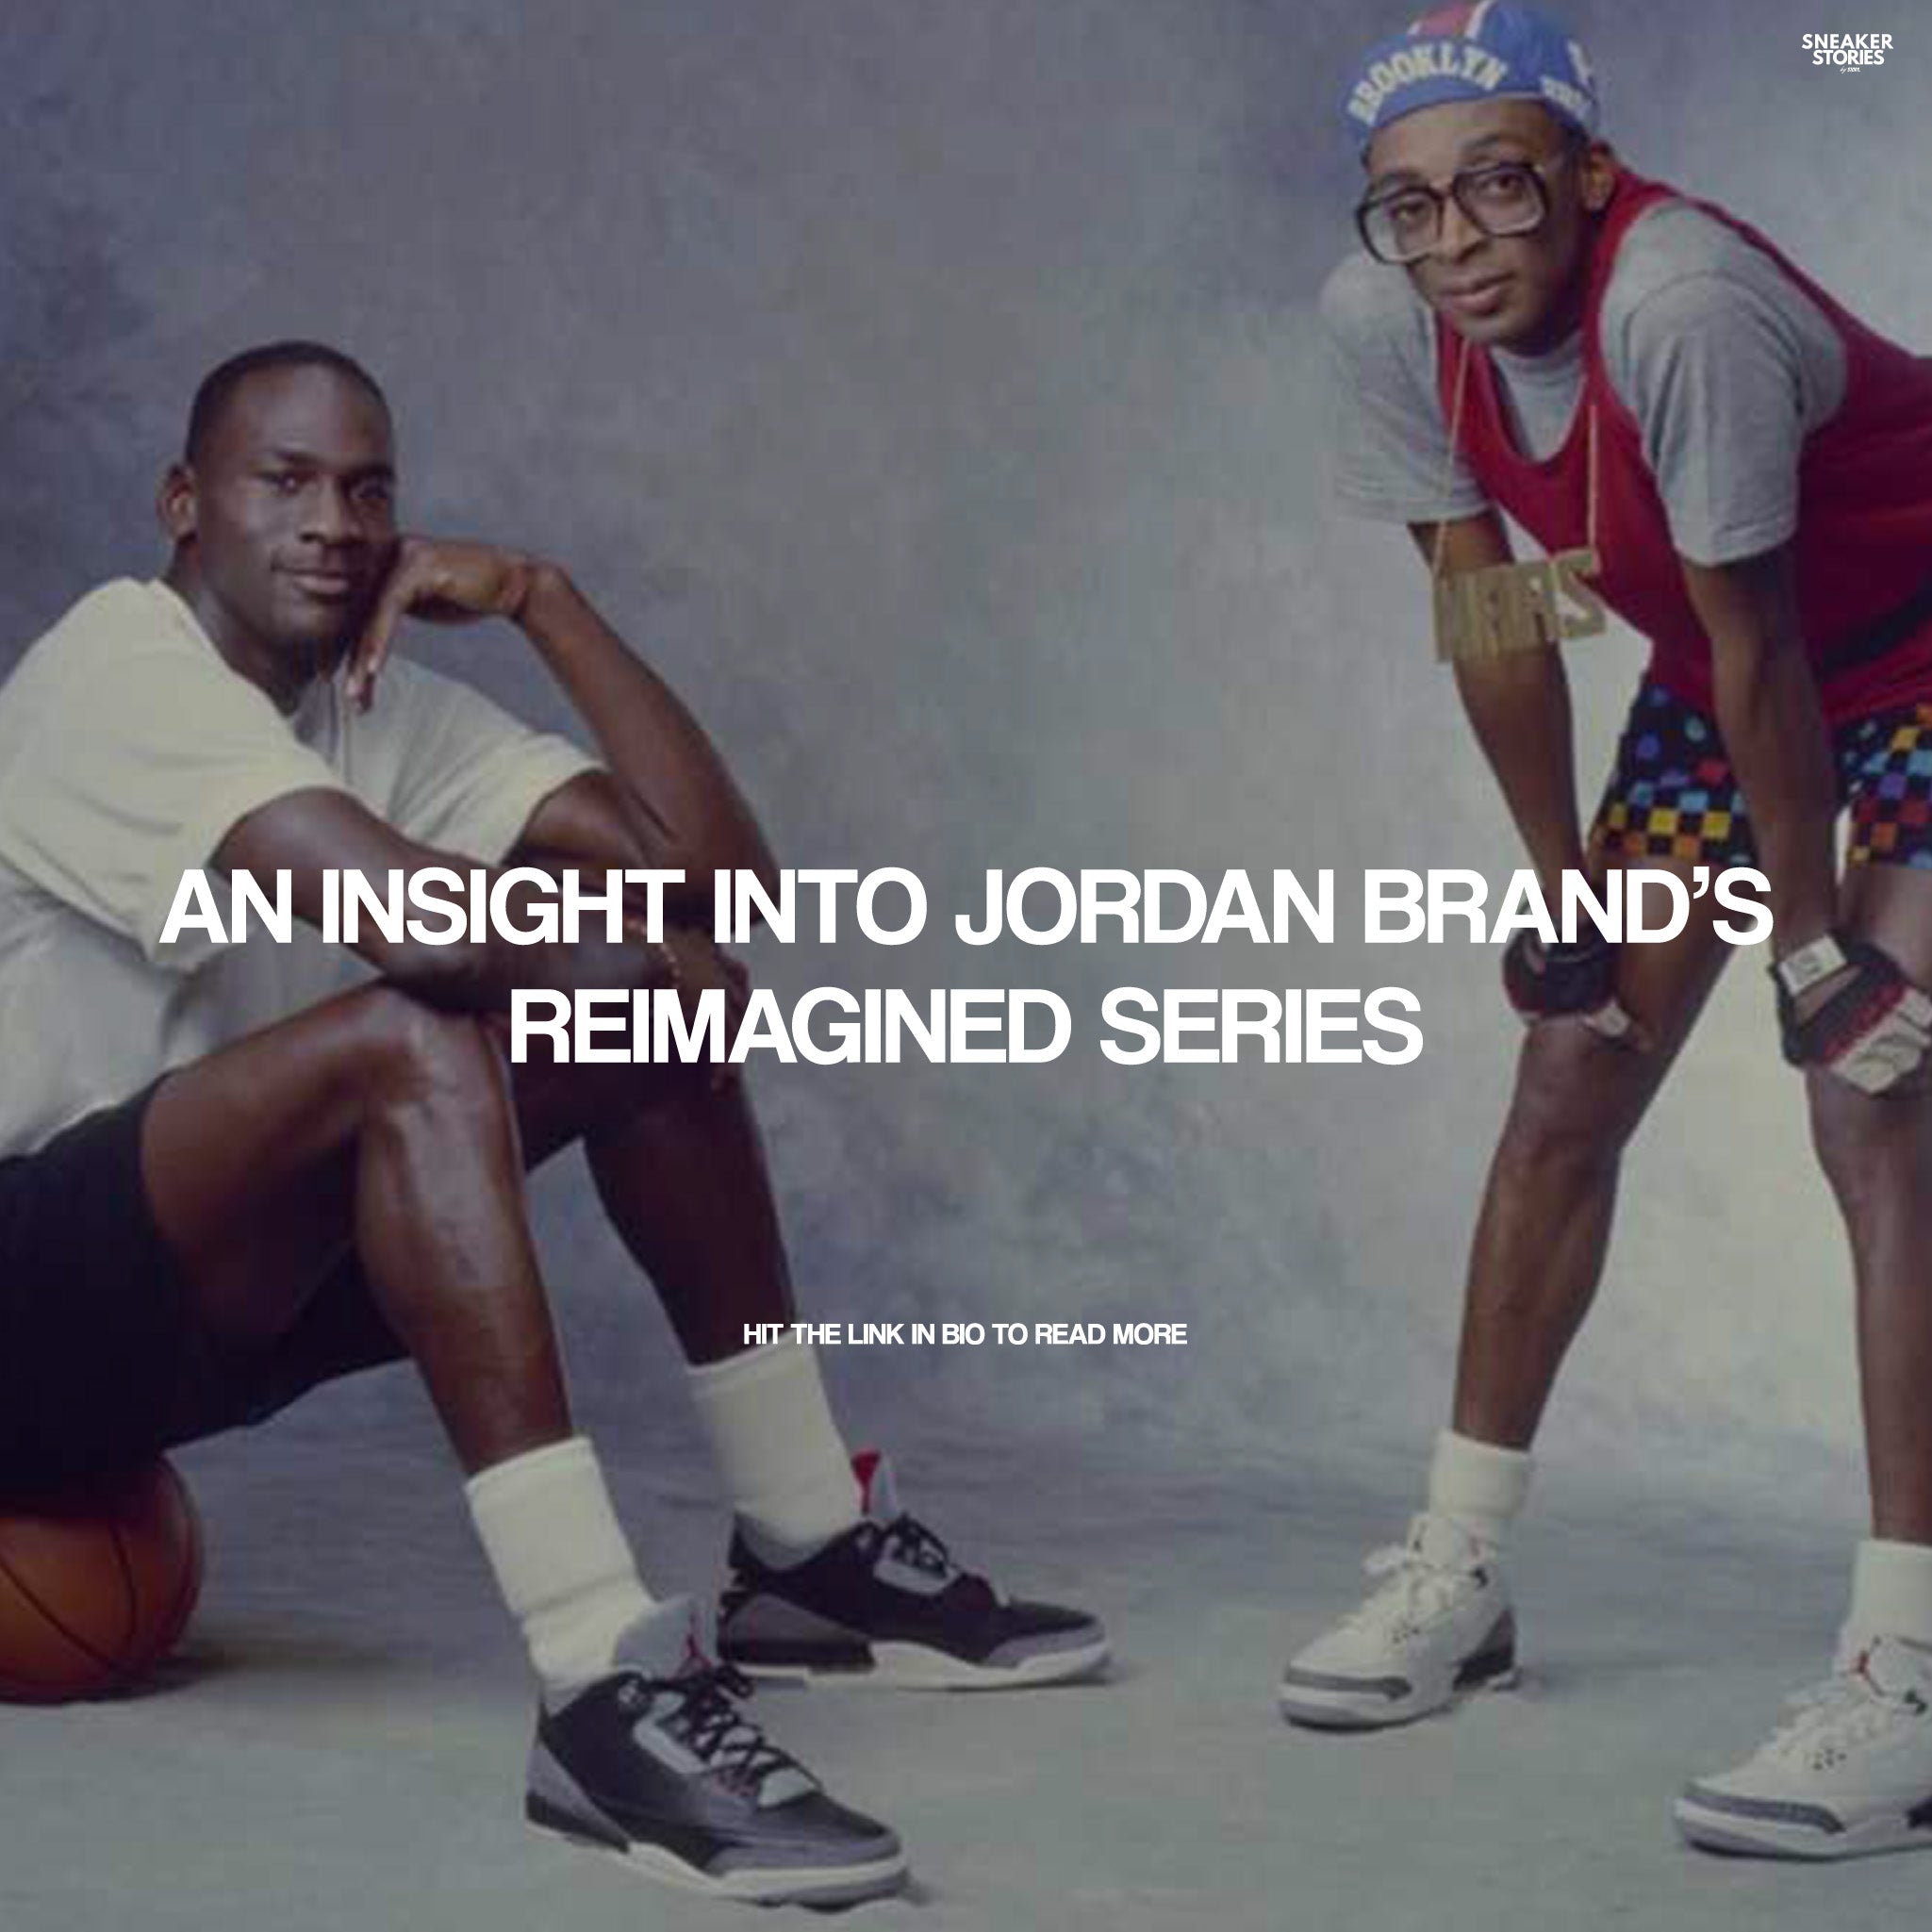 An insight into Jordan Brand’s Reimagined series